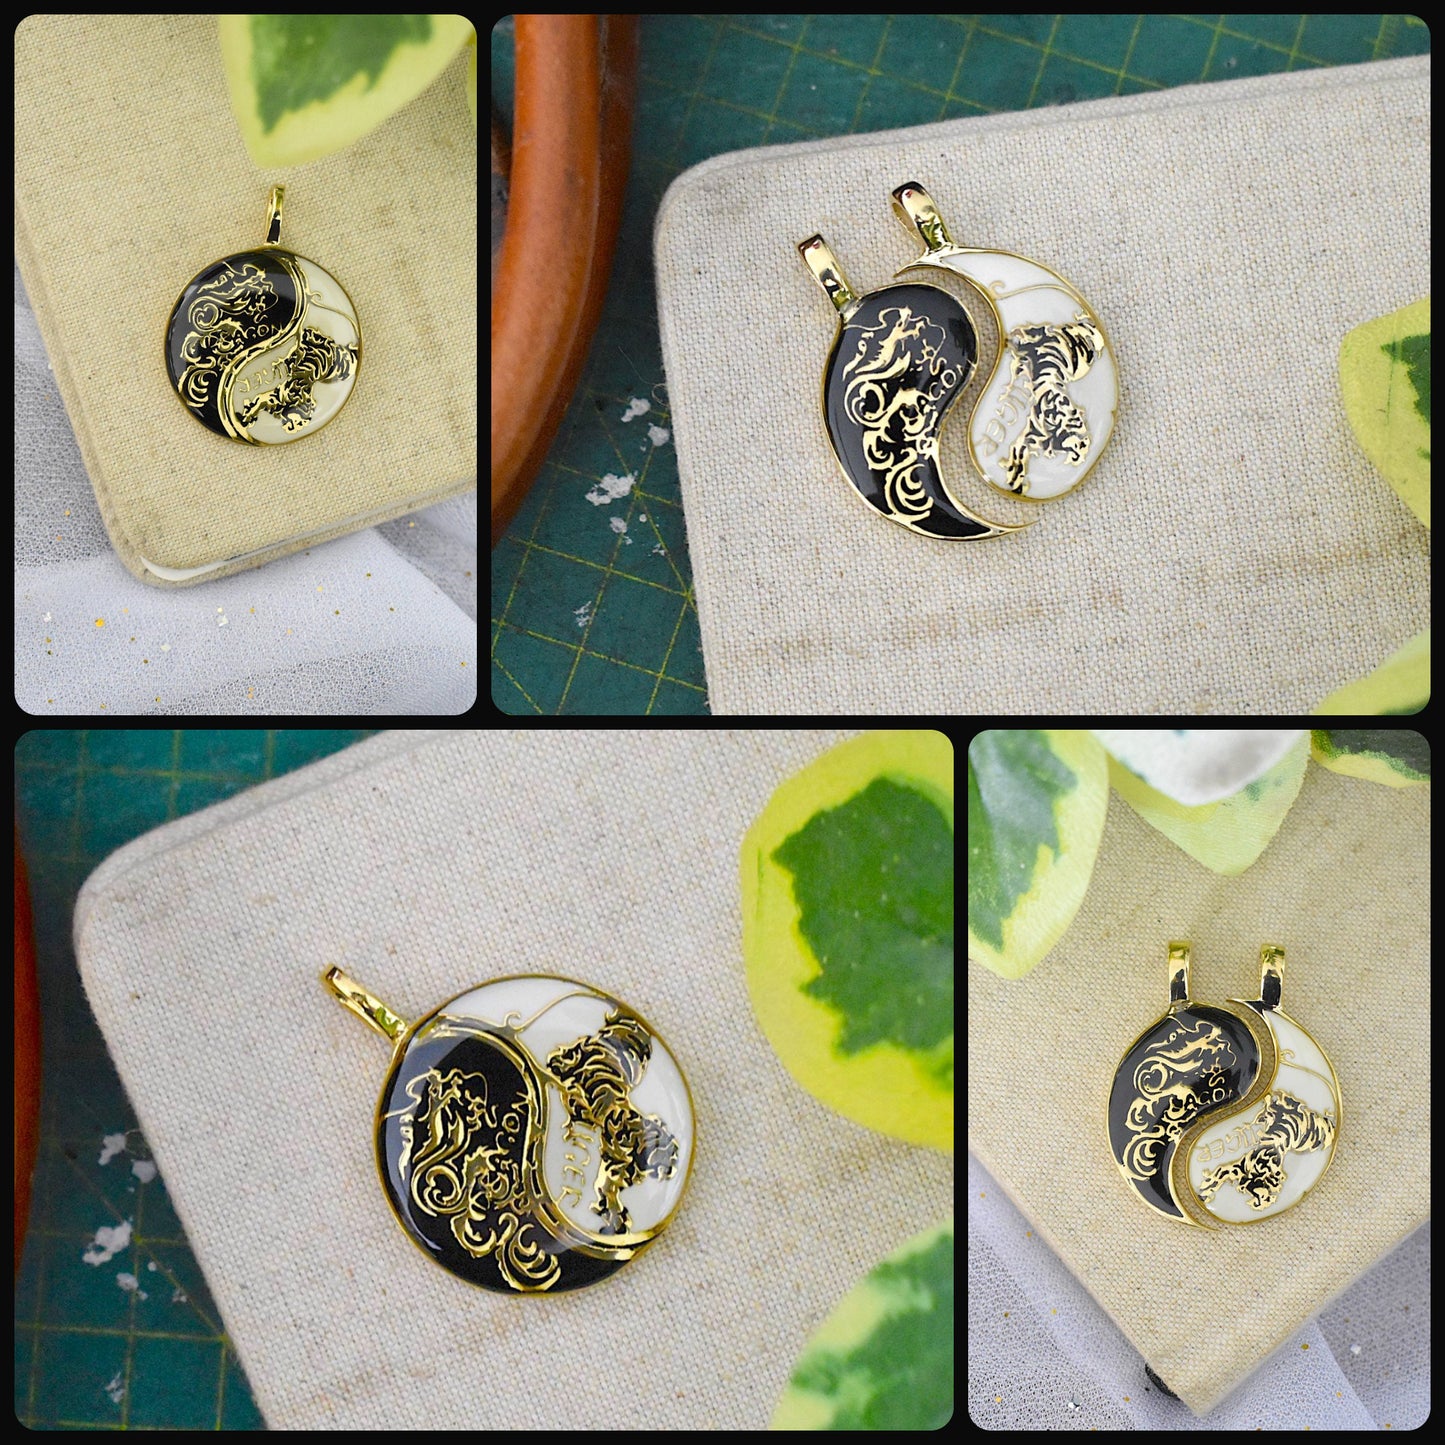 Dragon Tiger Yin Yang Best Friend Handmade Pewter Brass Necklace Pendant Jewelry